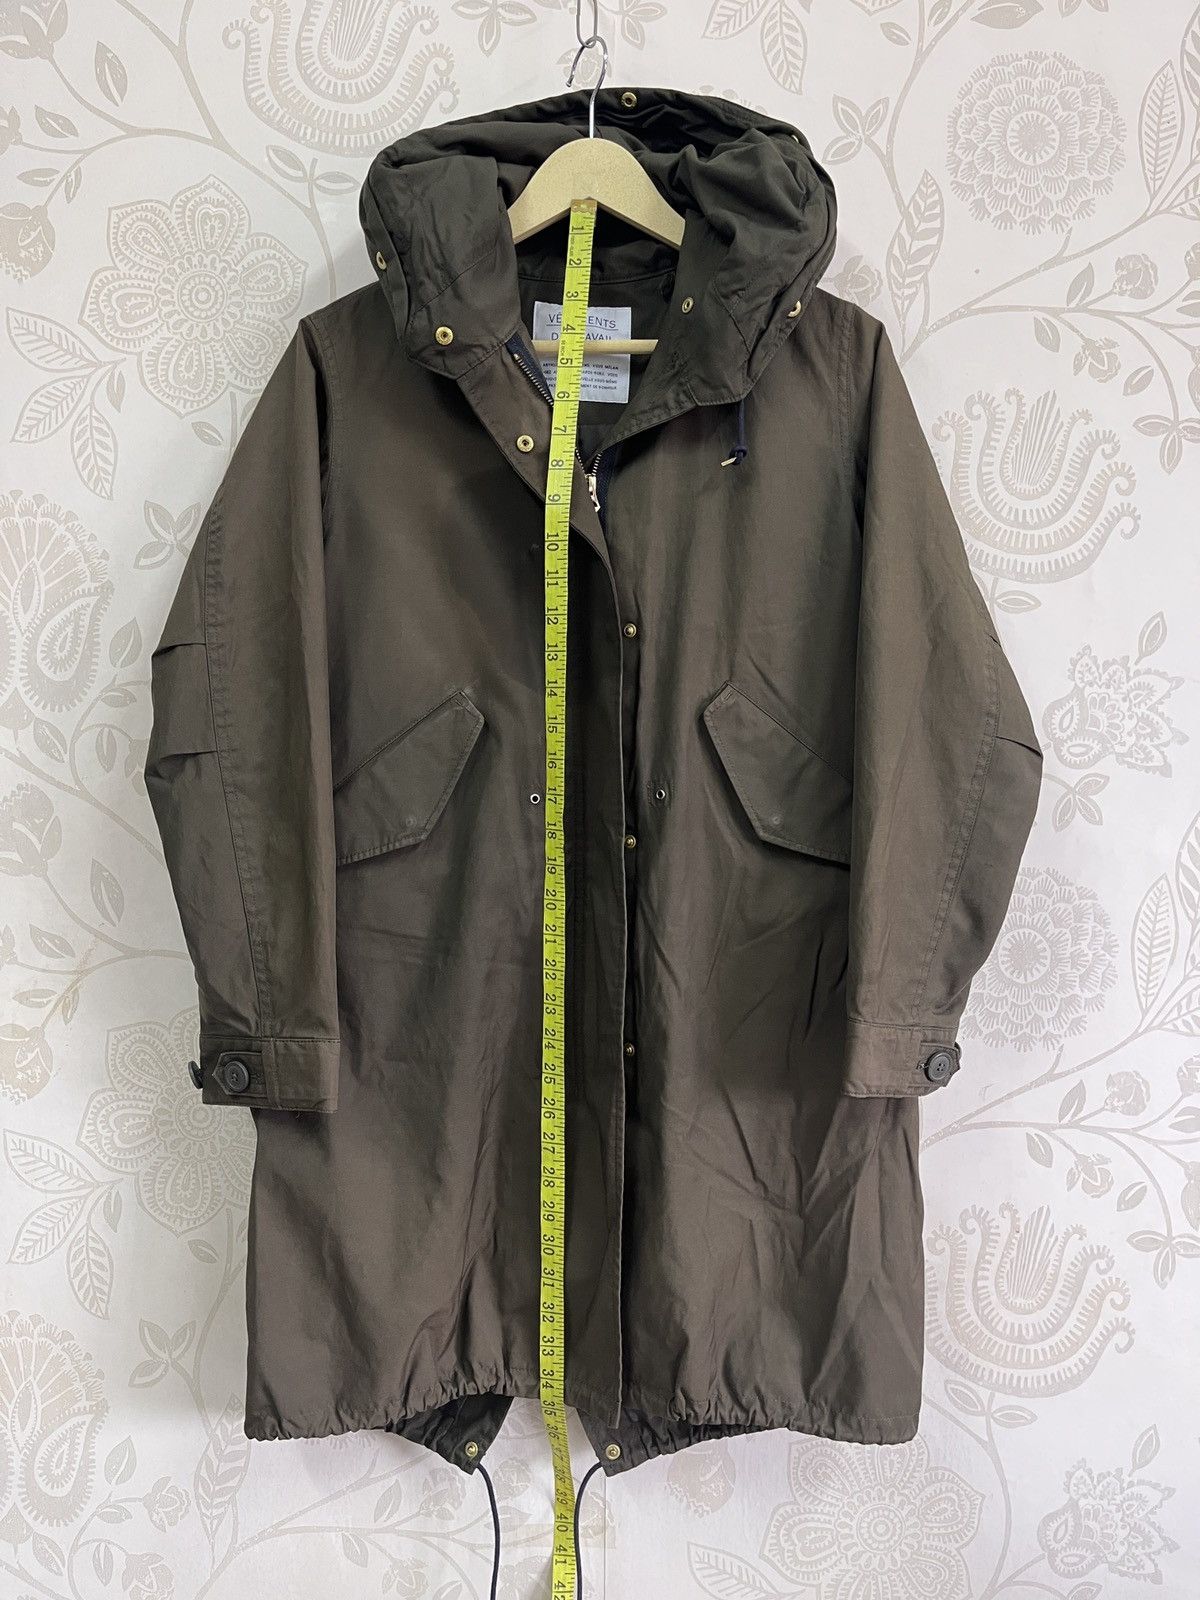 Japanese Brand - Vetements De Travail Long Parka Coat Fishtail Jacket Hooded - 2